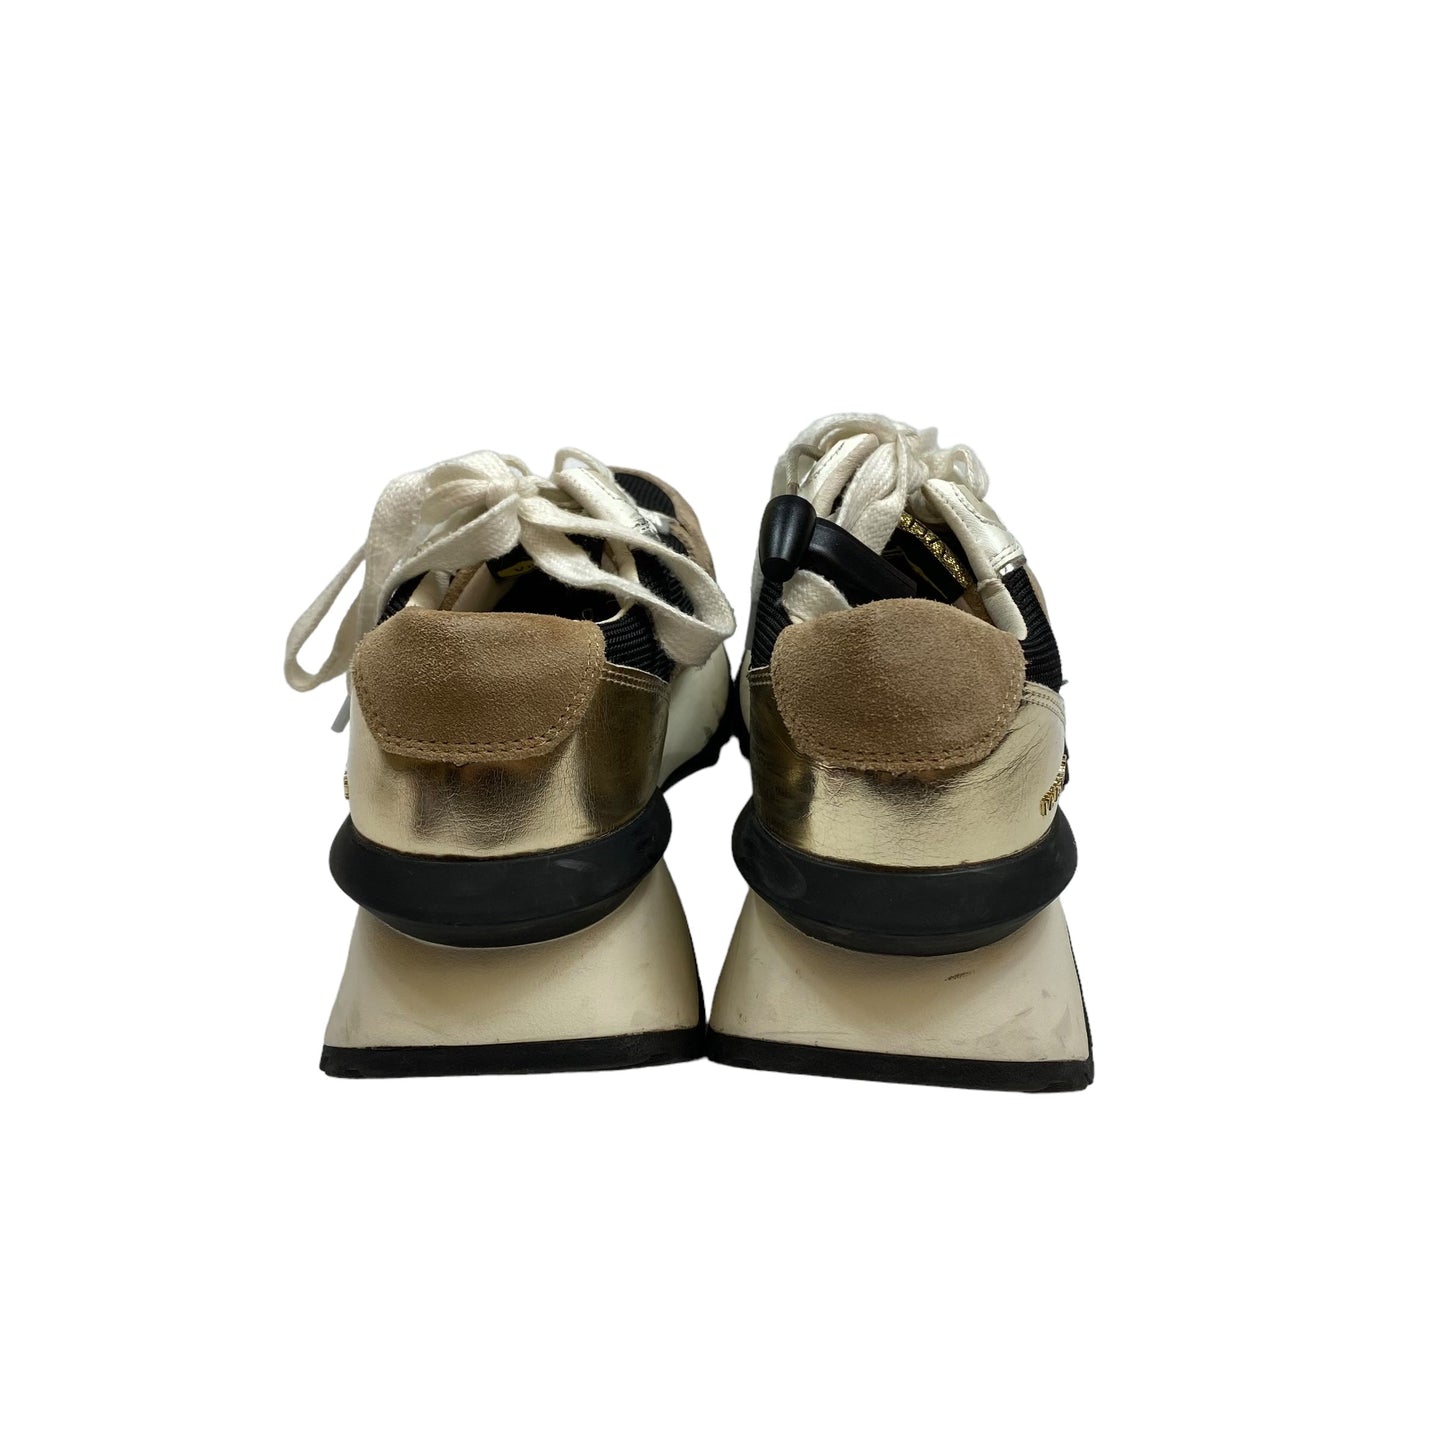 Black & Cream Shoes Sneakers Vintage Havana, Size 7.5